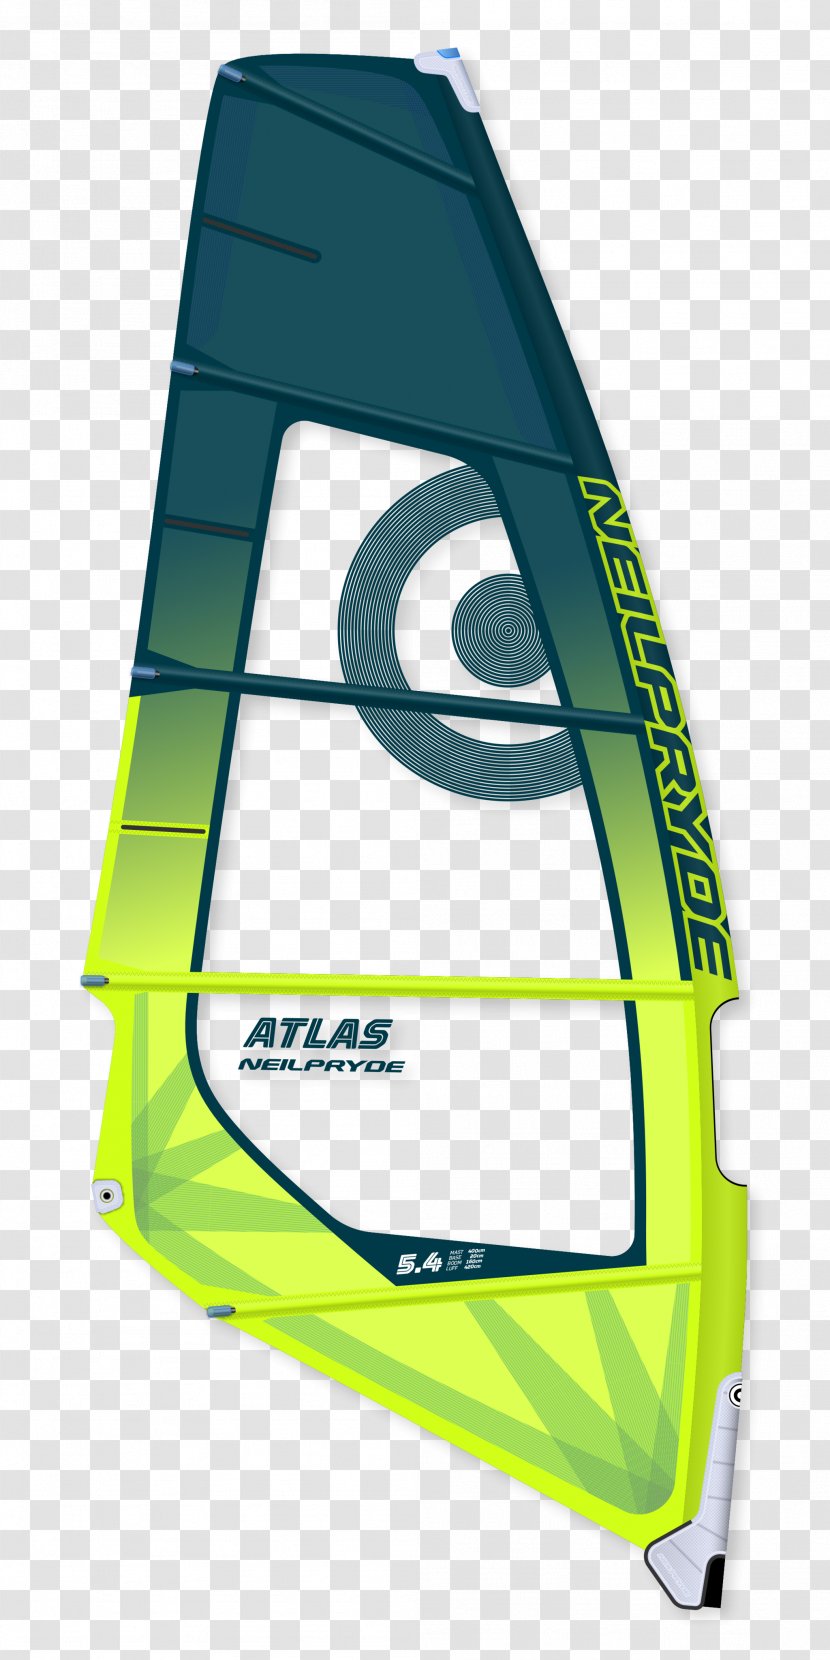 2018 Volkswagen Atlas Neil Pryde Ltd. Sail Windsurfing Kitesurfing - Mast Transparent PNG